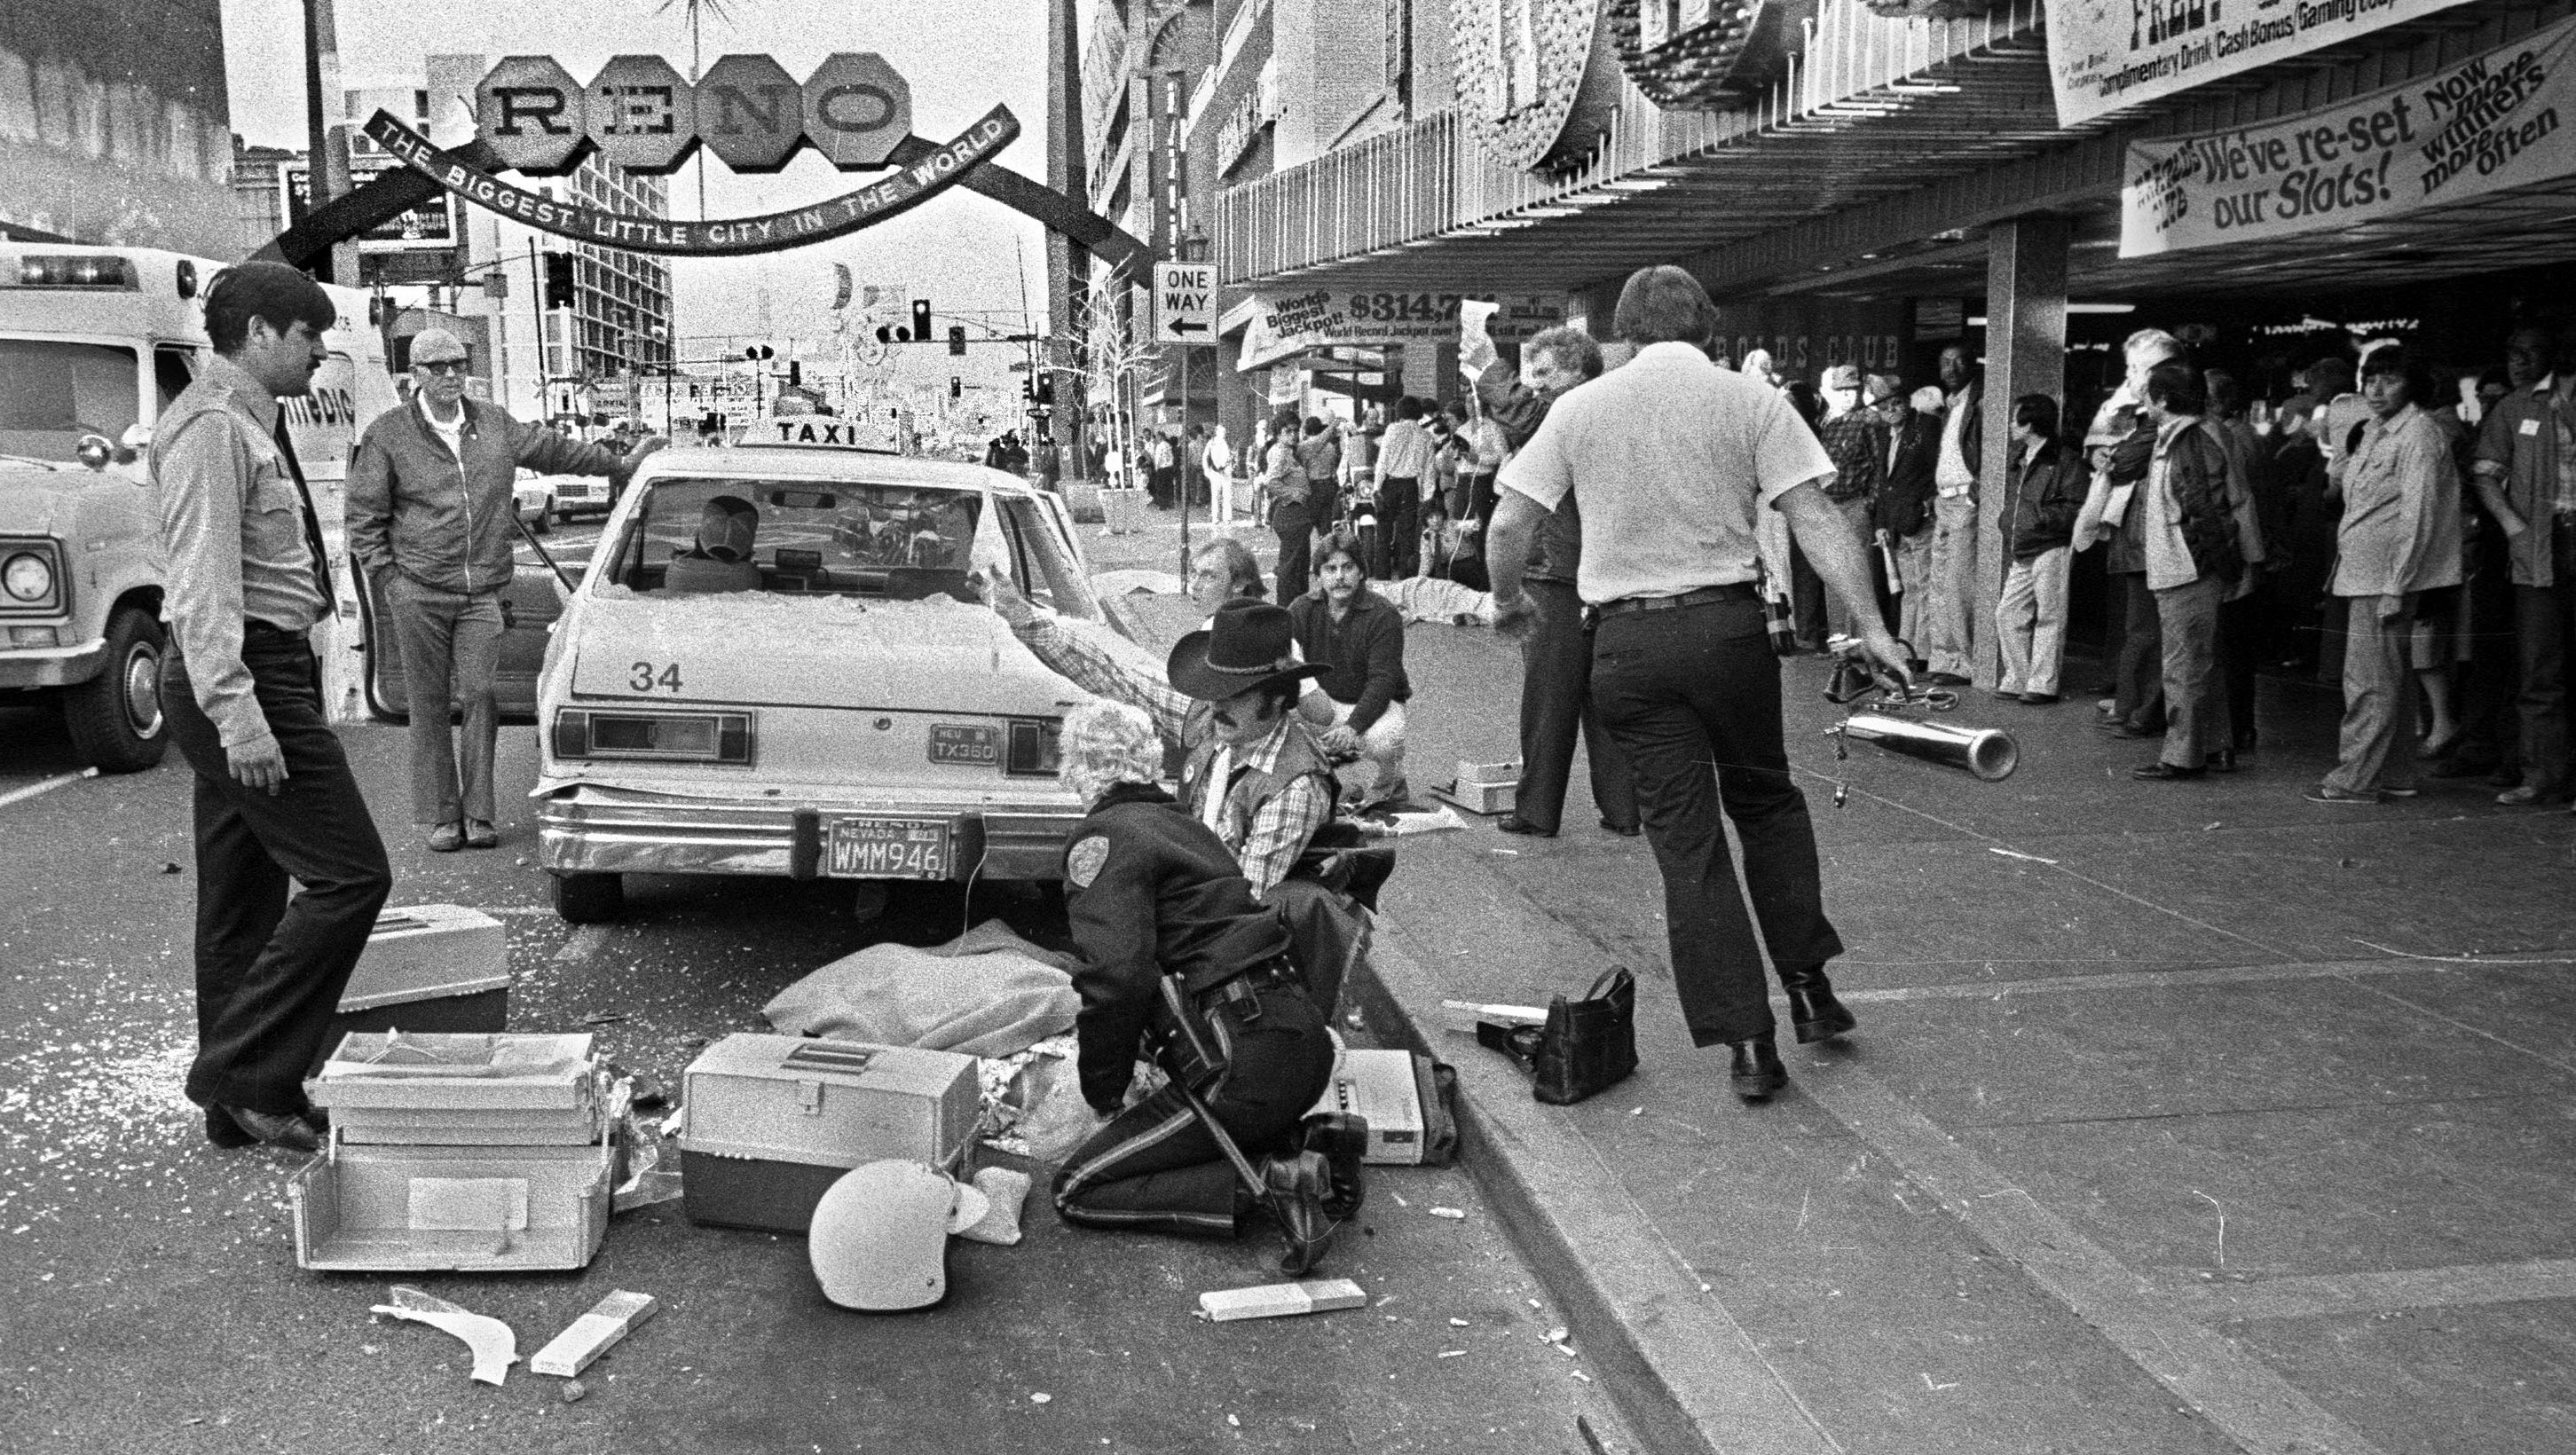 On Thanksgiving 1980, woman drove into Reno crowd, killing 6